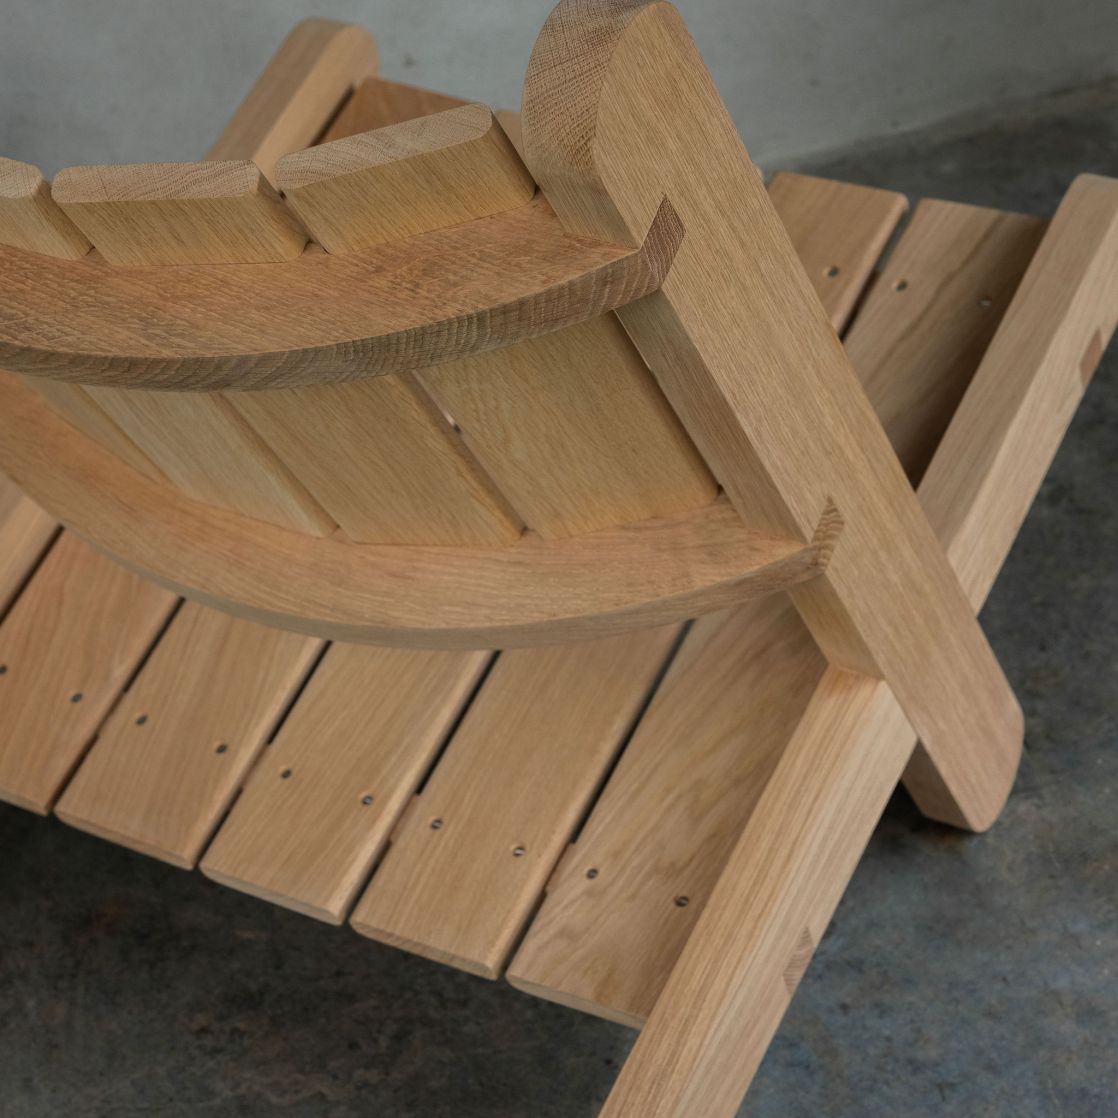 a wooden outdoor chair